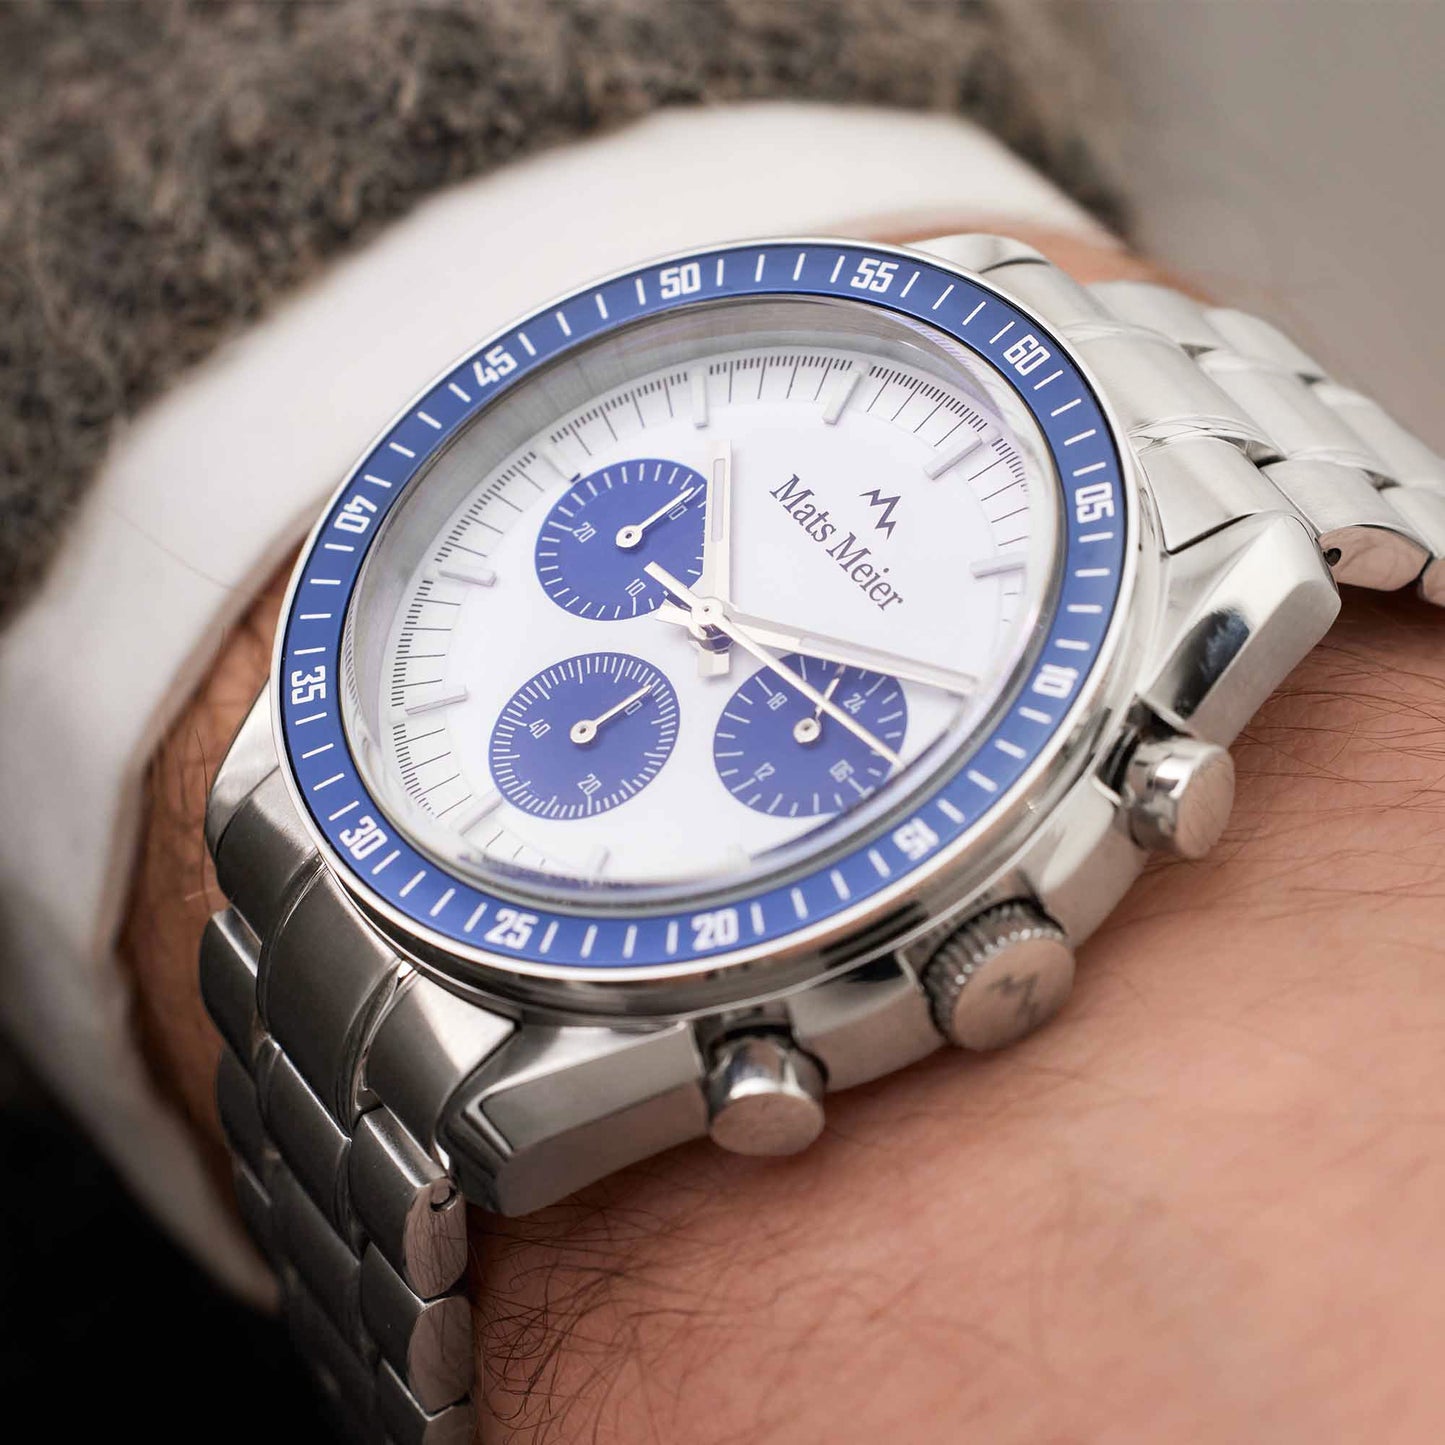 Arosa Racing cronografo orologio da uomo color argento e bianco